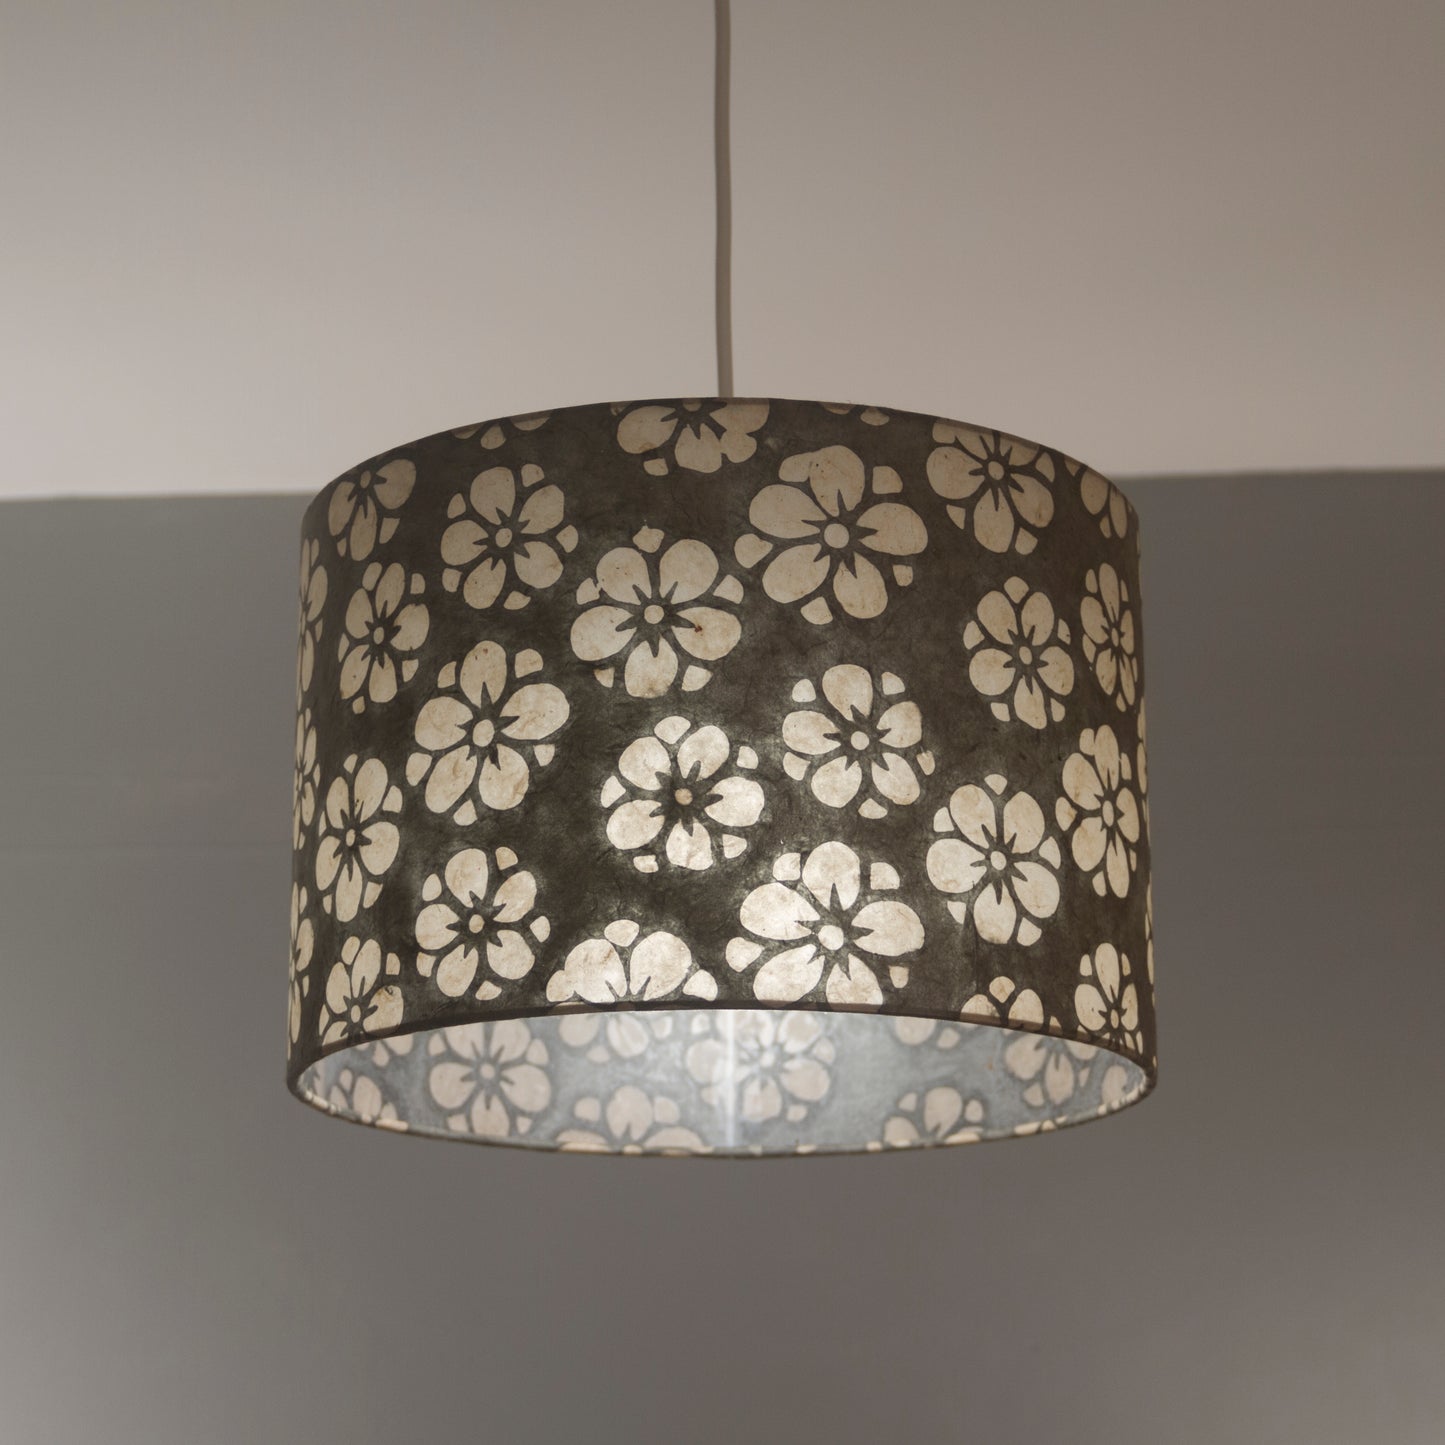 Drum Lamp Shade - P77 - Batik Star Flower Grey, 30cm(d) x 20cm(h)